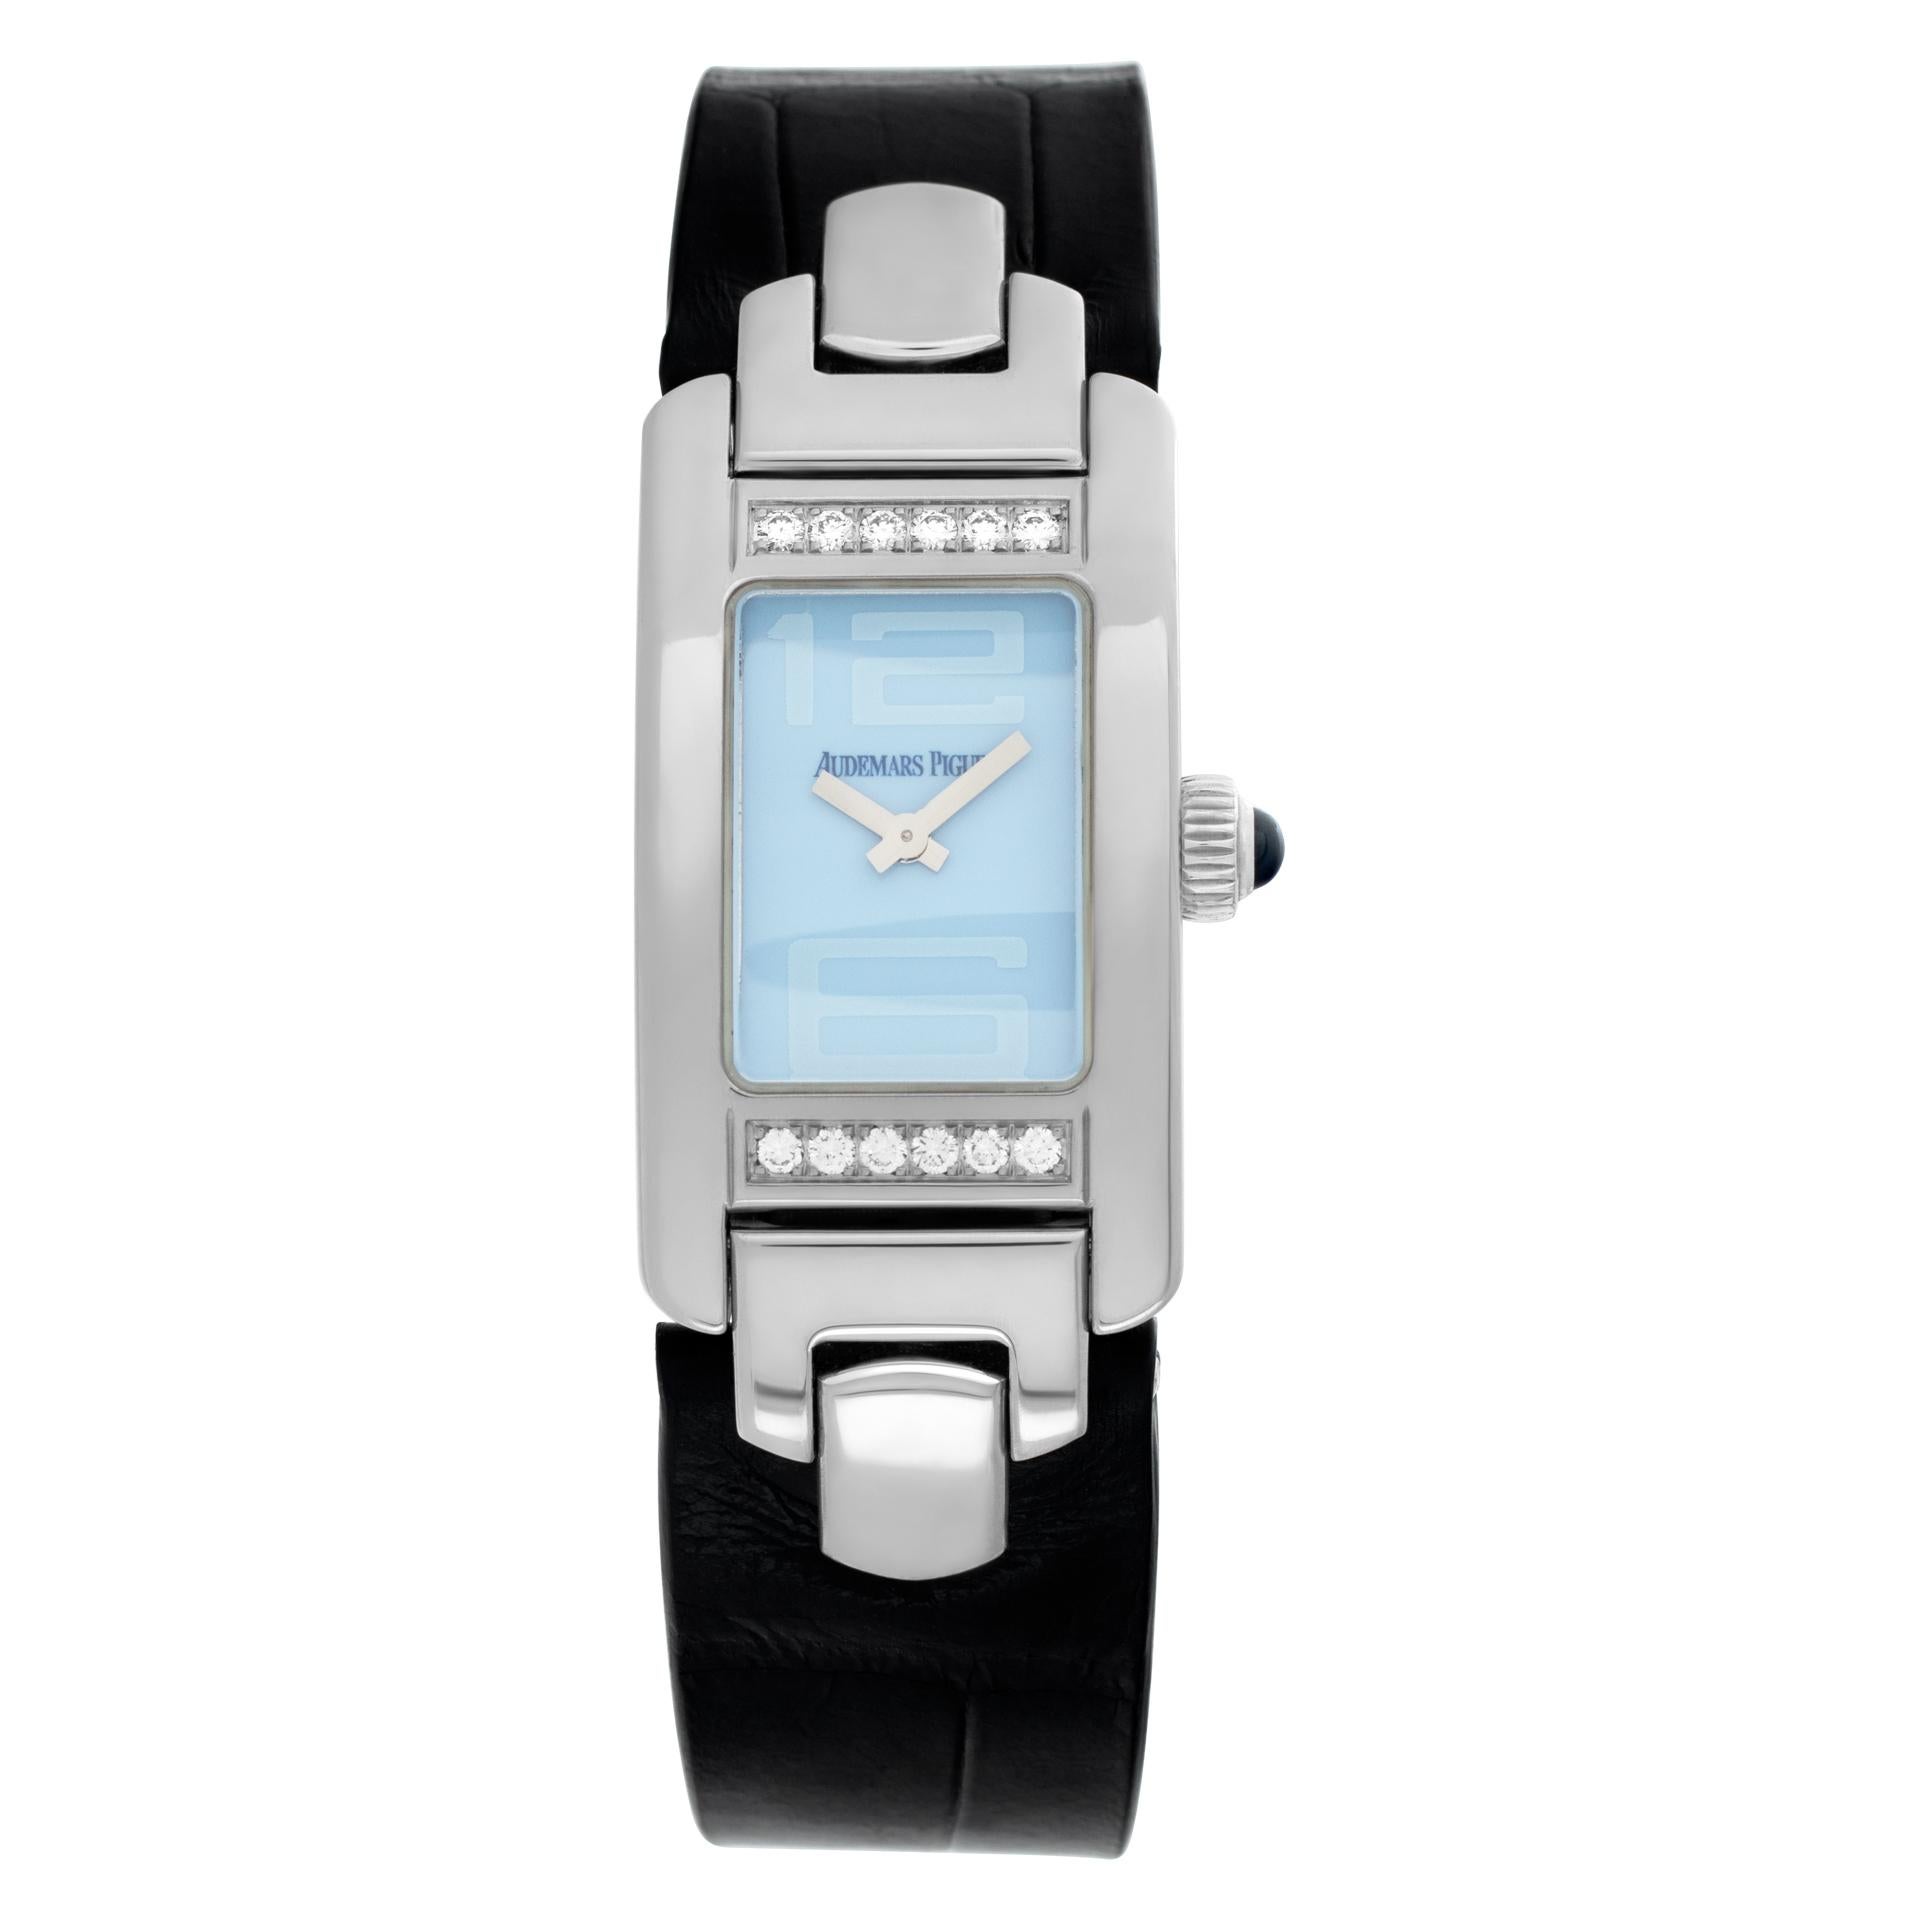 Audemars Piguet Promesse 18k white gold wristwatch Ref 67461bczza023lz01 For Sale